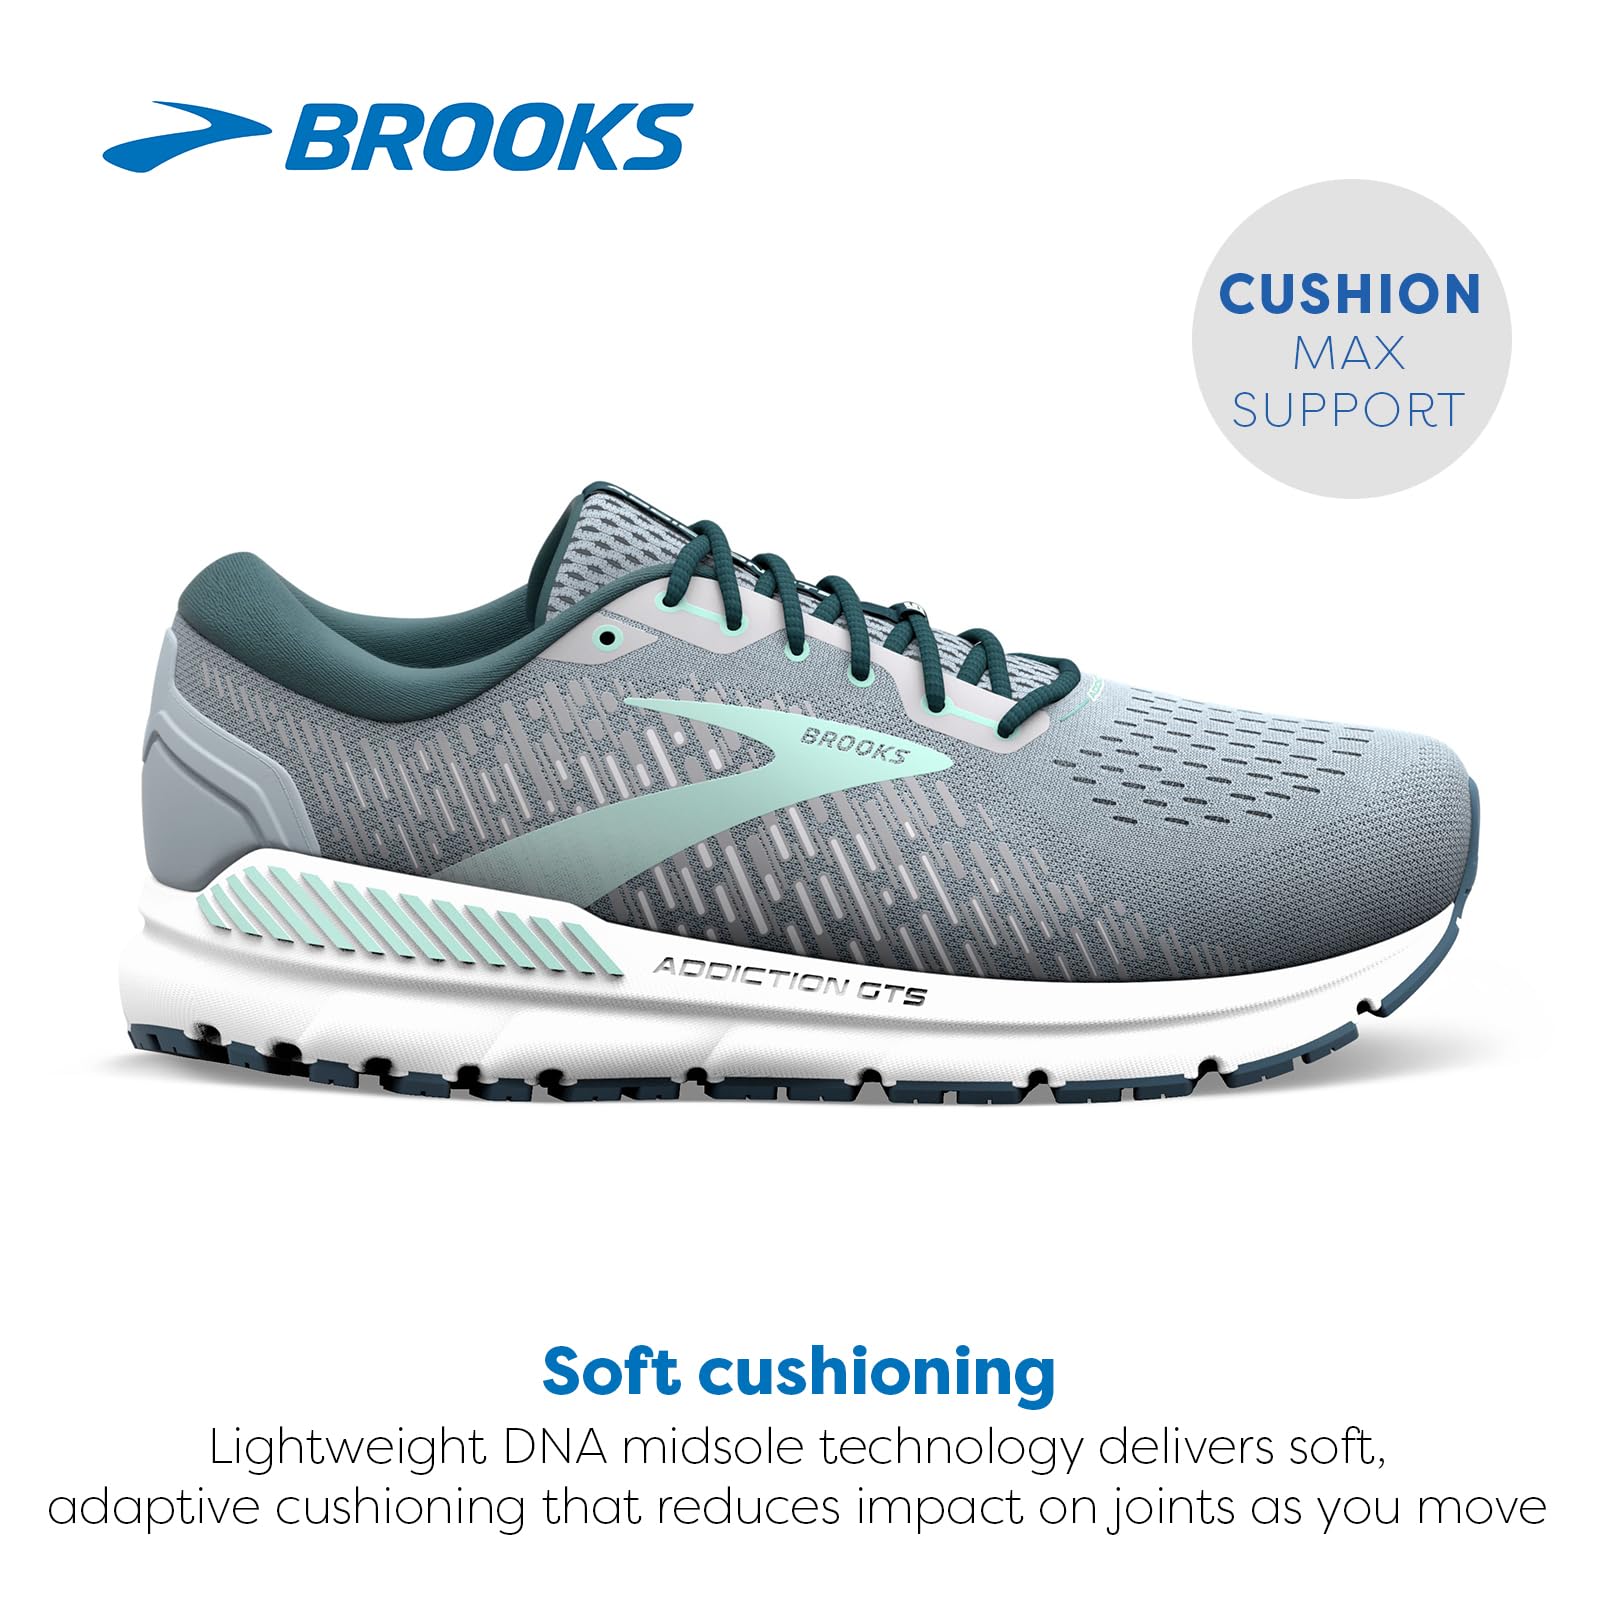 Brooks Women's Addiction GTS 15 Supportive Running Shoe - Grey/Navy/Aqua - 10 Wide